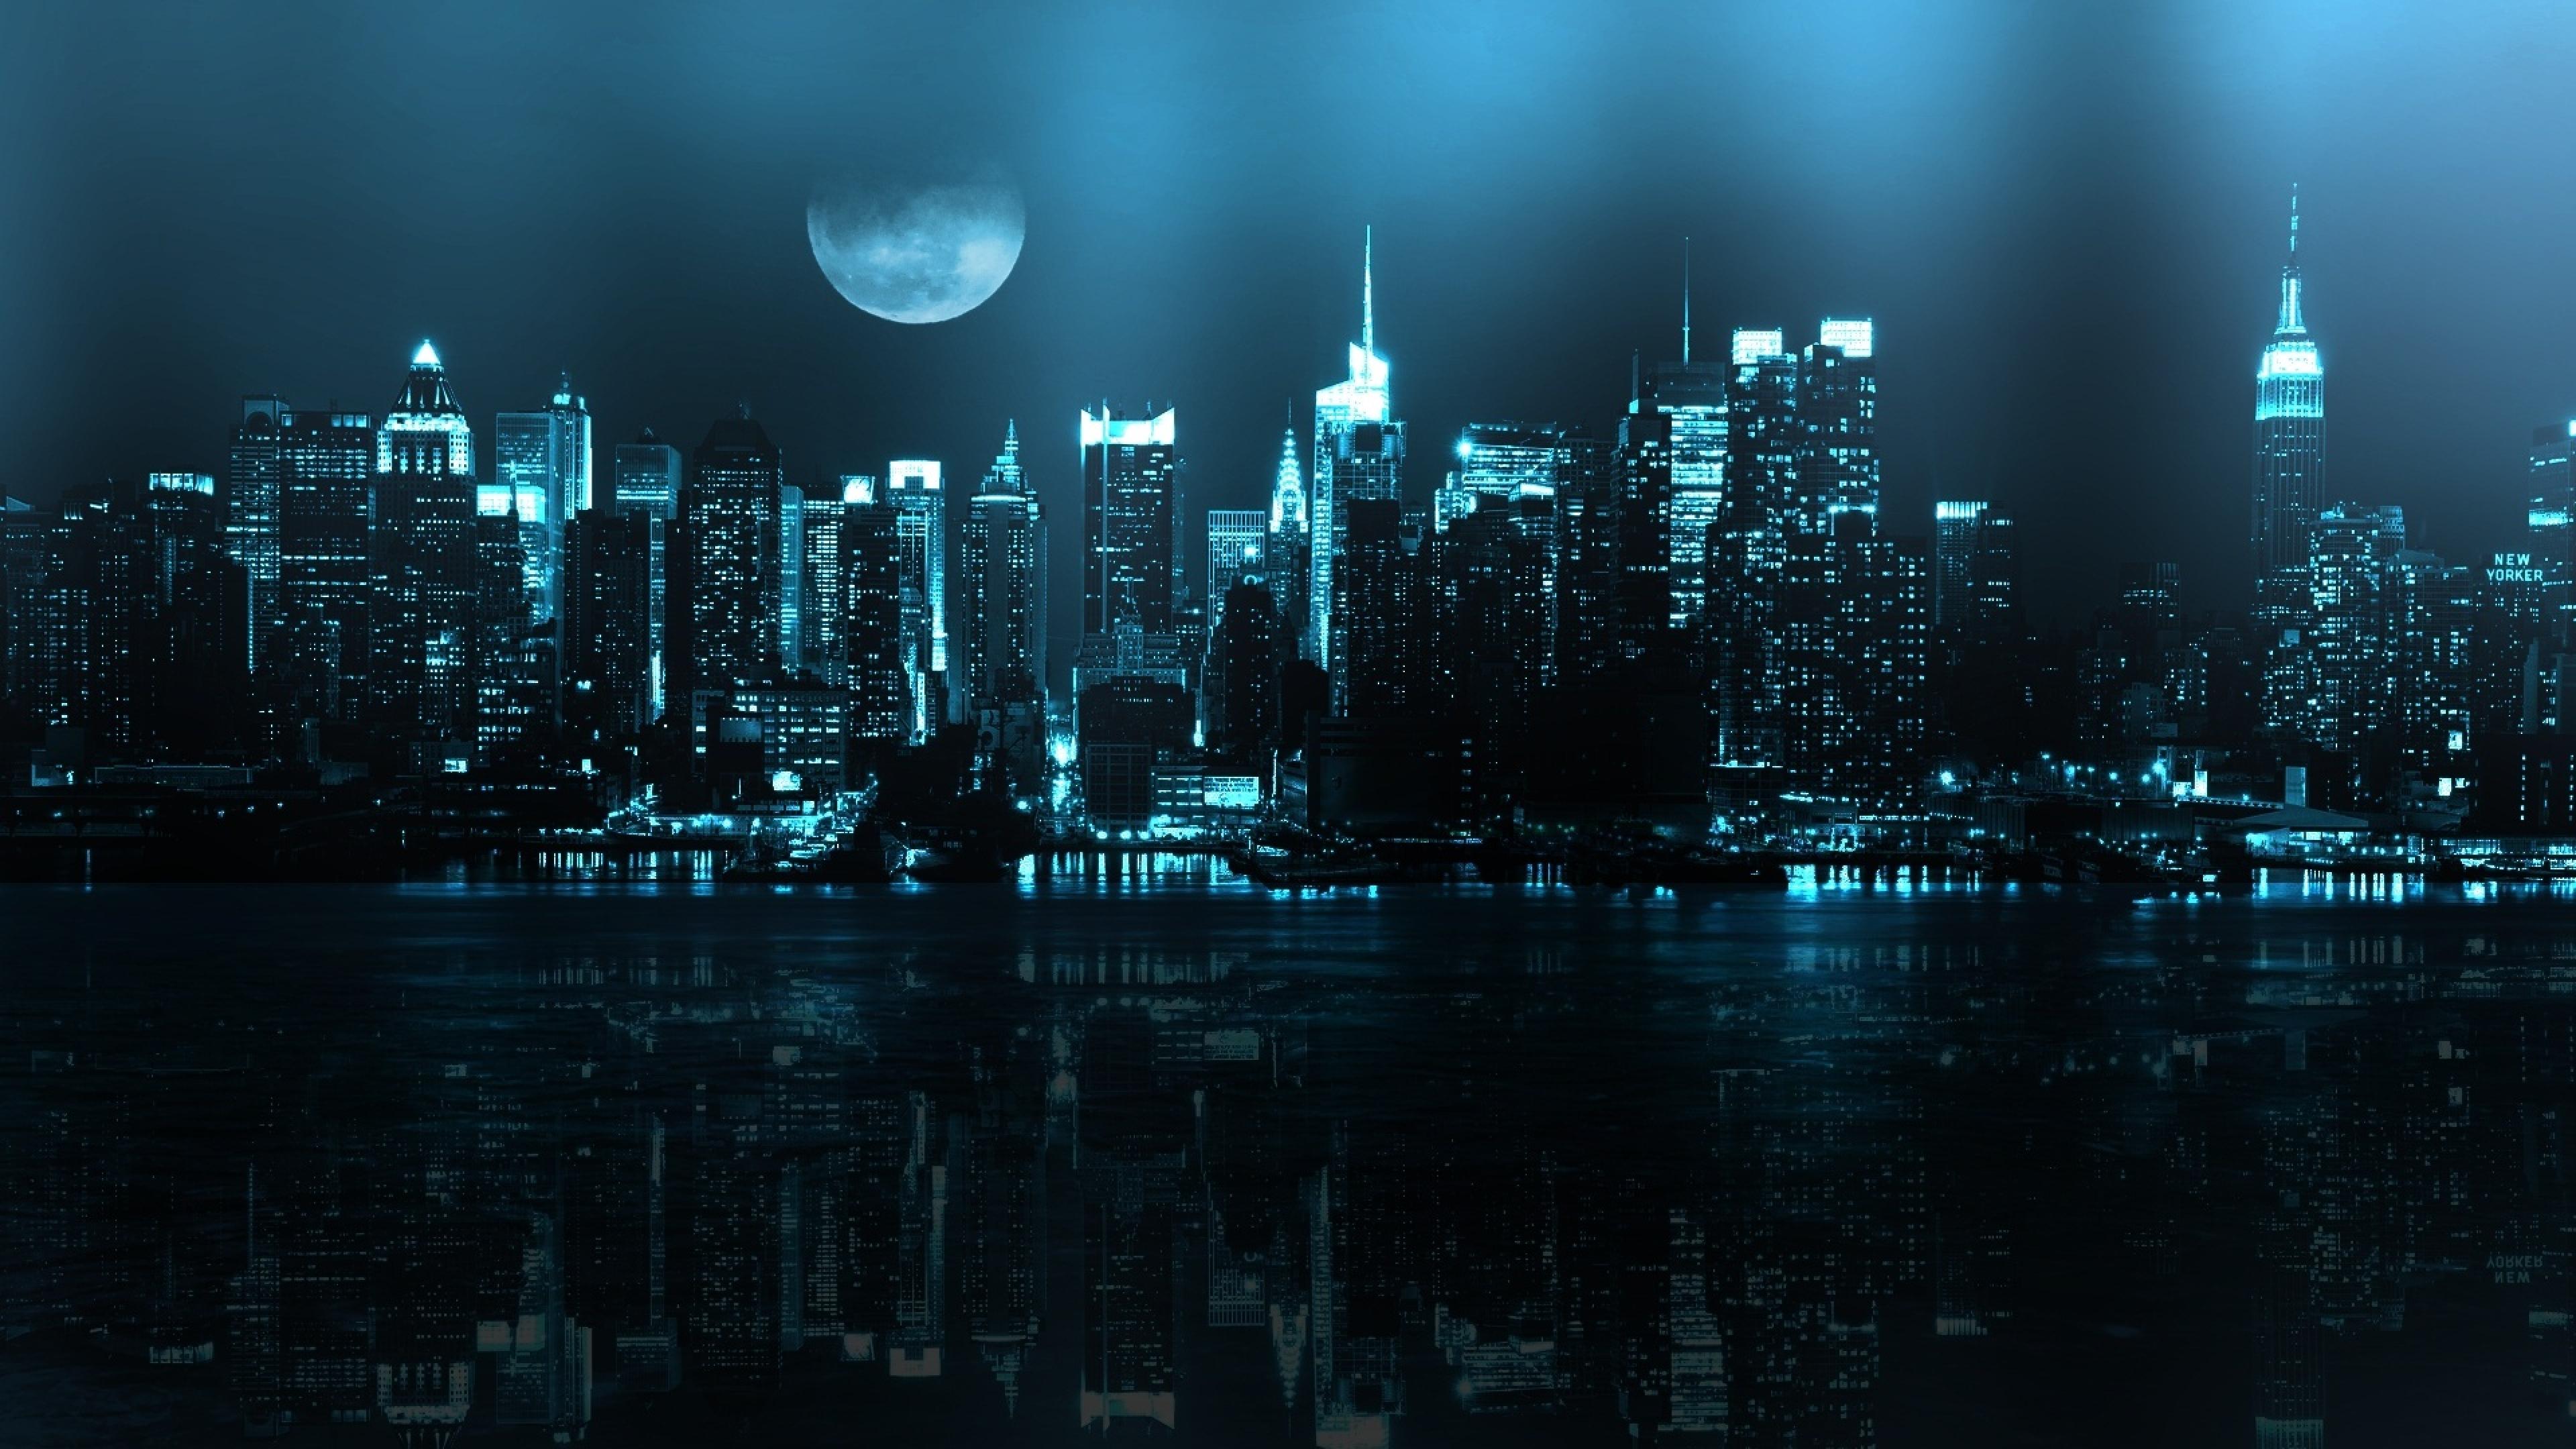 New York Blue Neon Lighting Of The City Night View HD Wallpaper, Wallpaper13.com